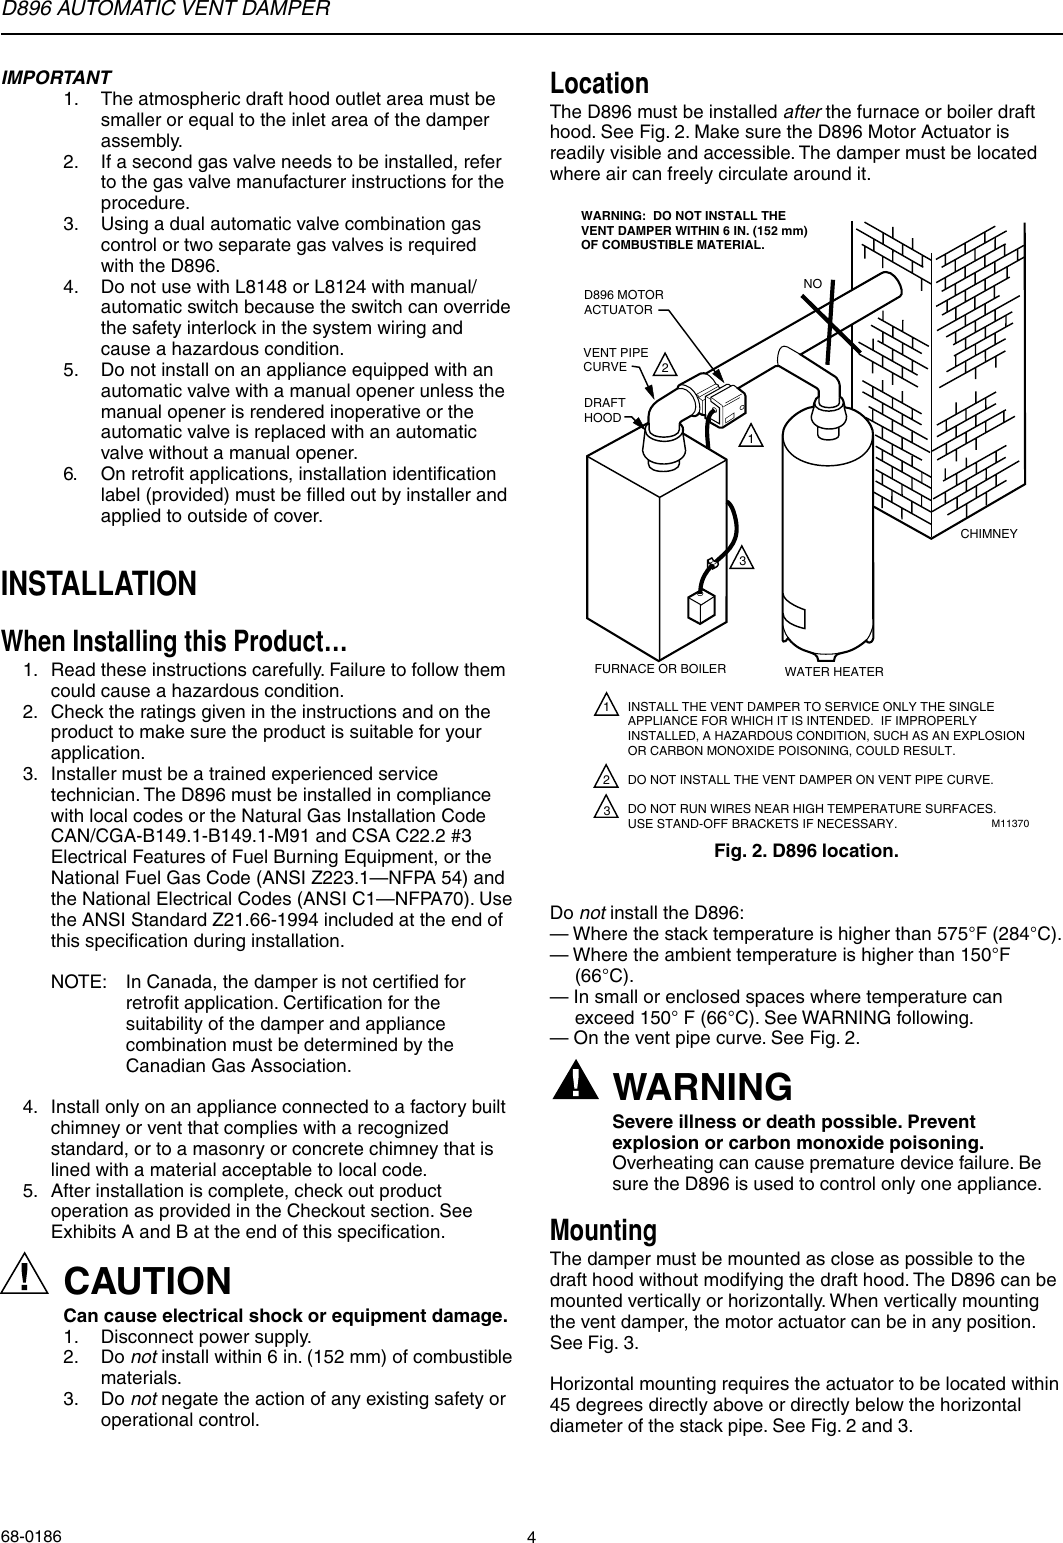 Page 4 of 12 - Honeywell Honeywell-Automatic-Vent-Damper-D896-Users-Manual- 68-0186 - D896 Automatic Vent Damper  Honeywell-automatic-vent-damper-d896-users-manual